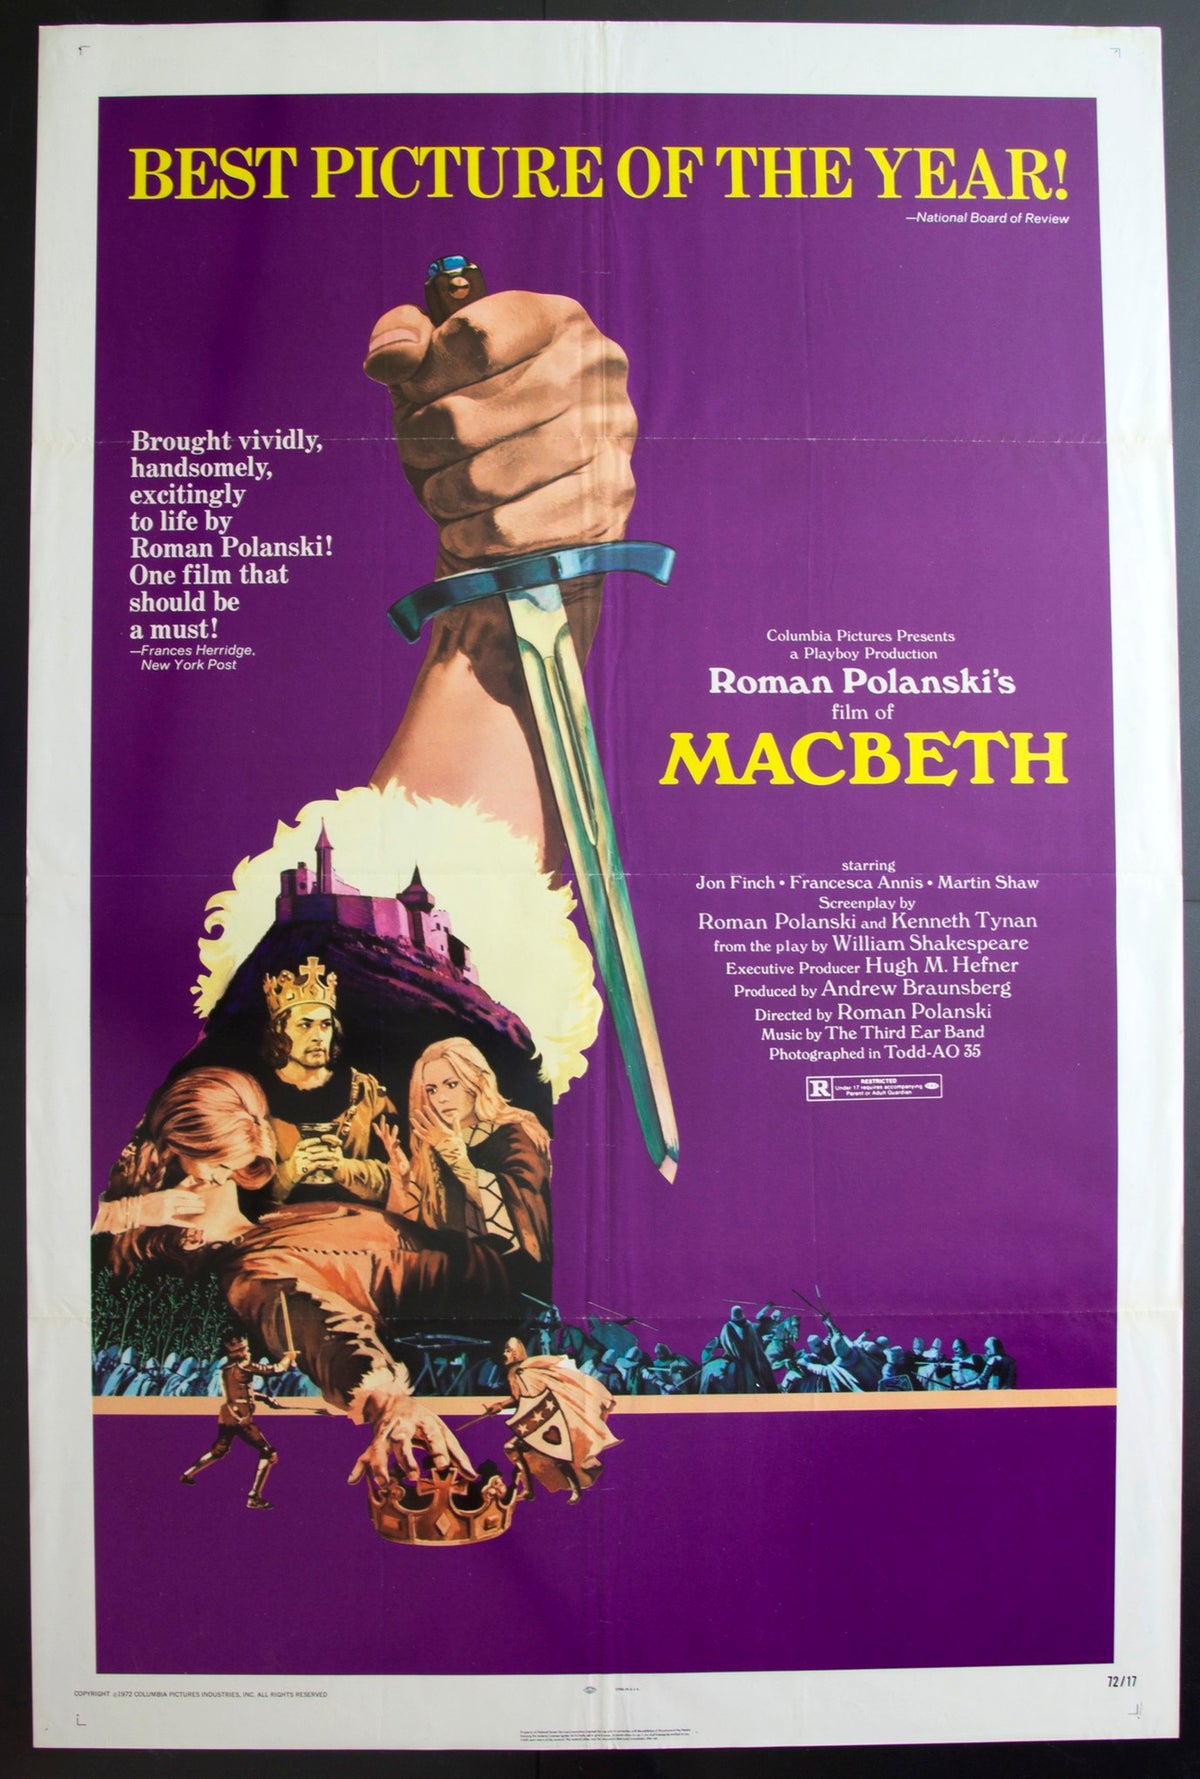 Macbeth (1971) original movie poster for sale at Original Film Art